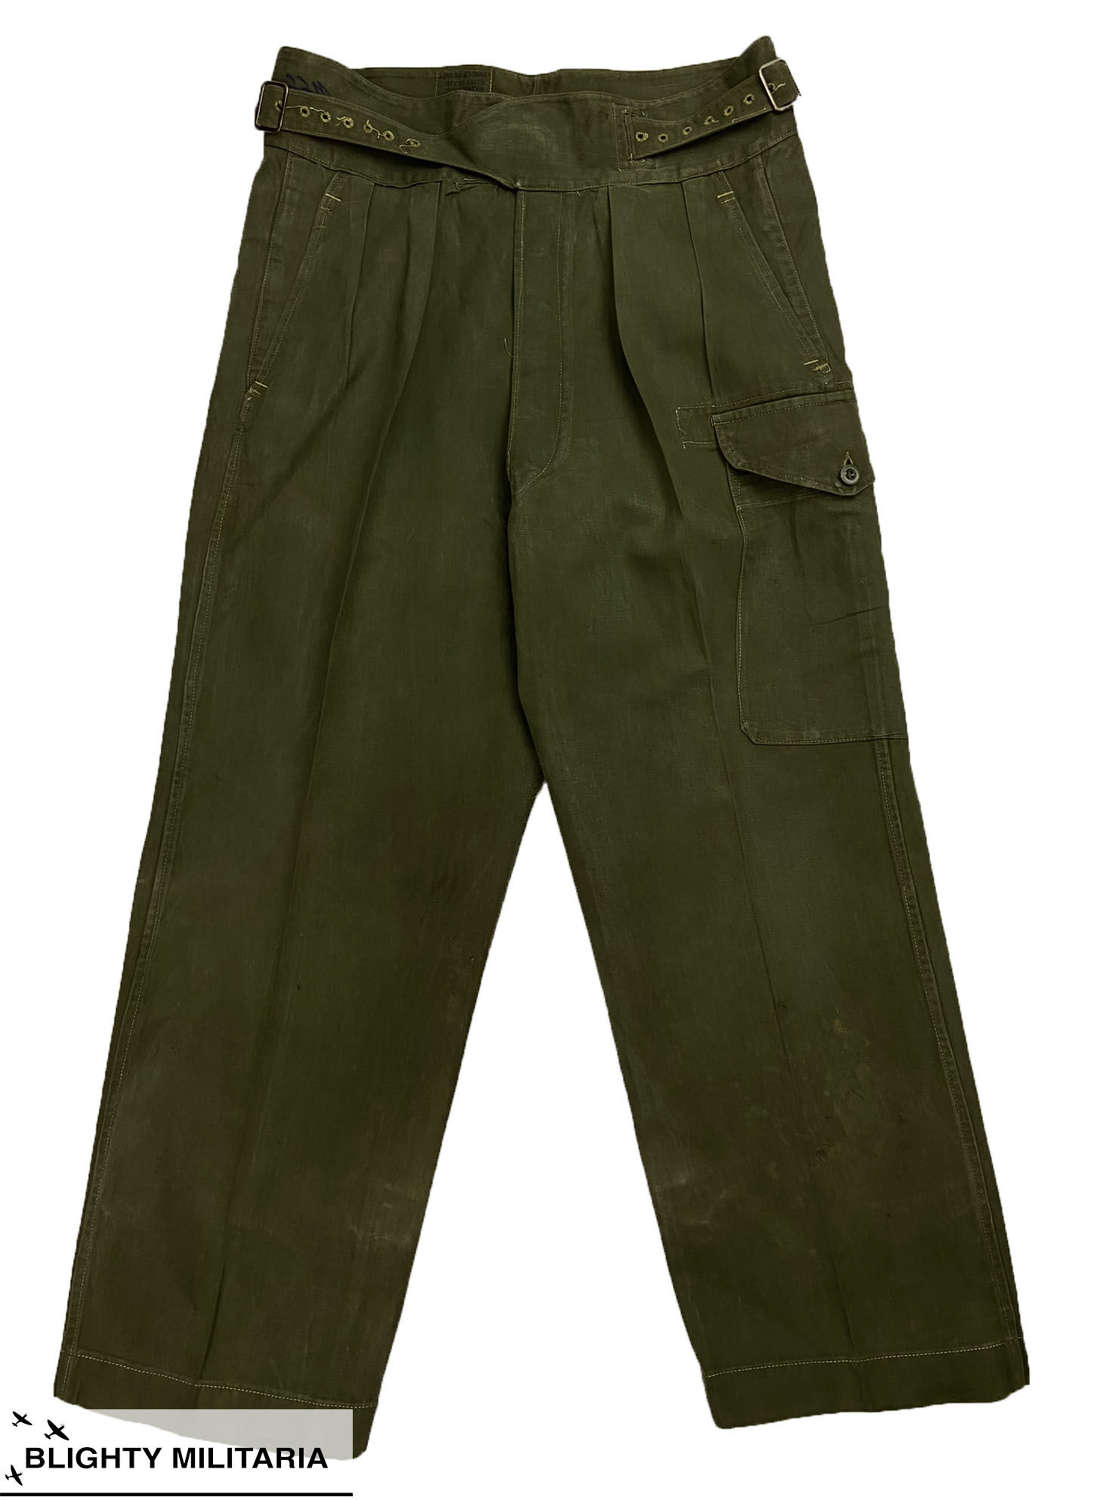 Original 1953 Dated 1950 Pattern British Jungle Green Trousers - 10